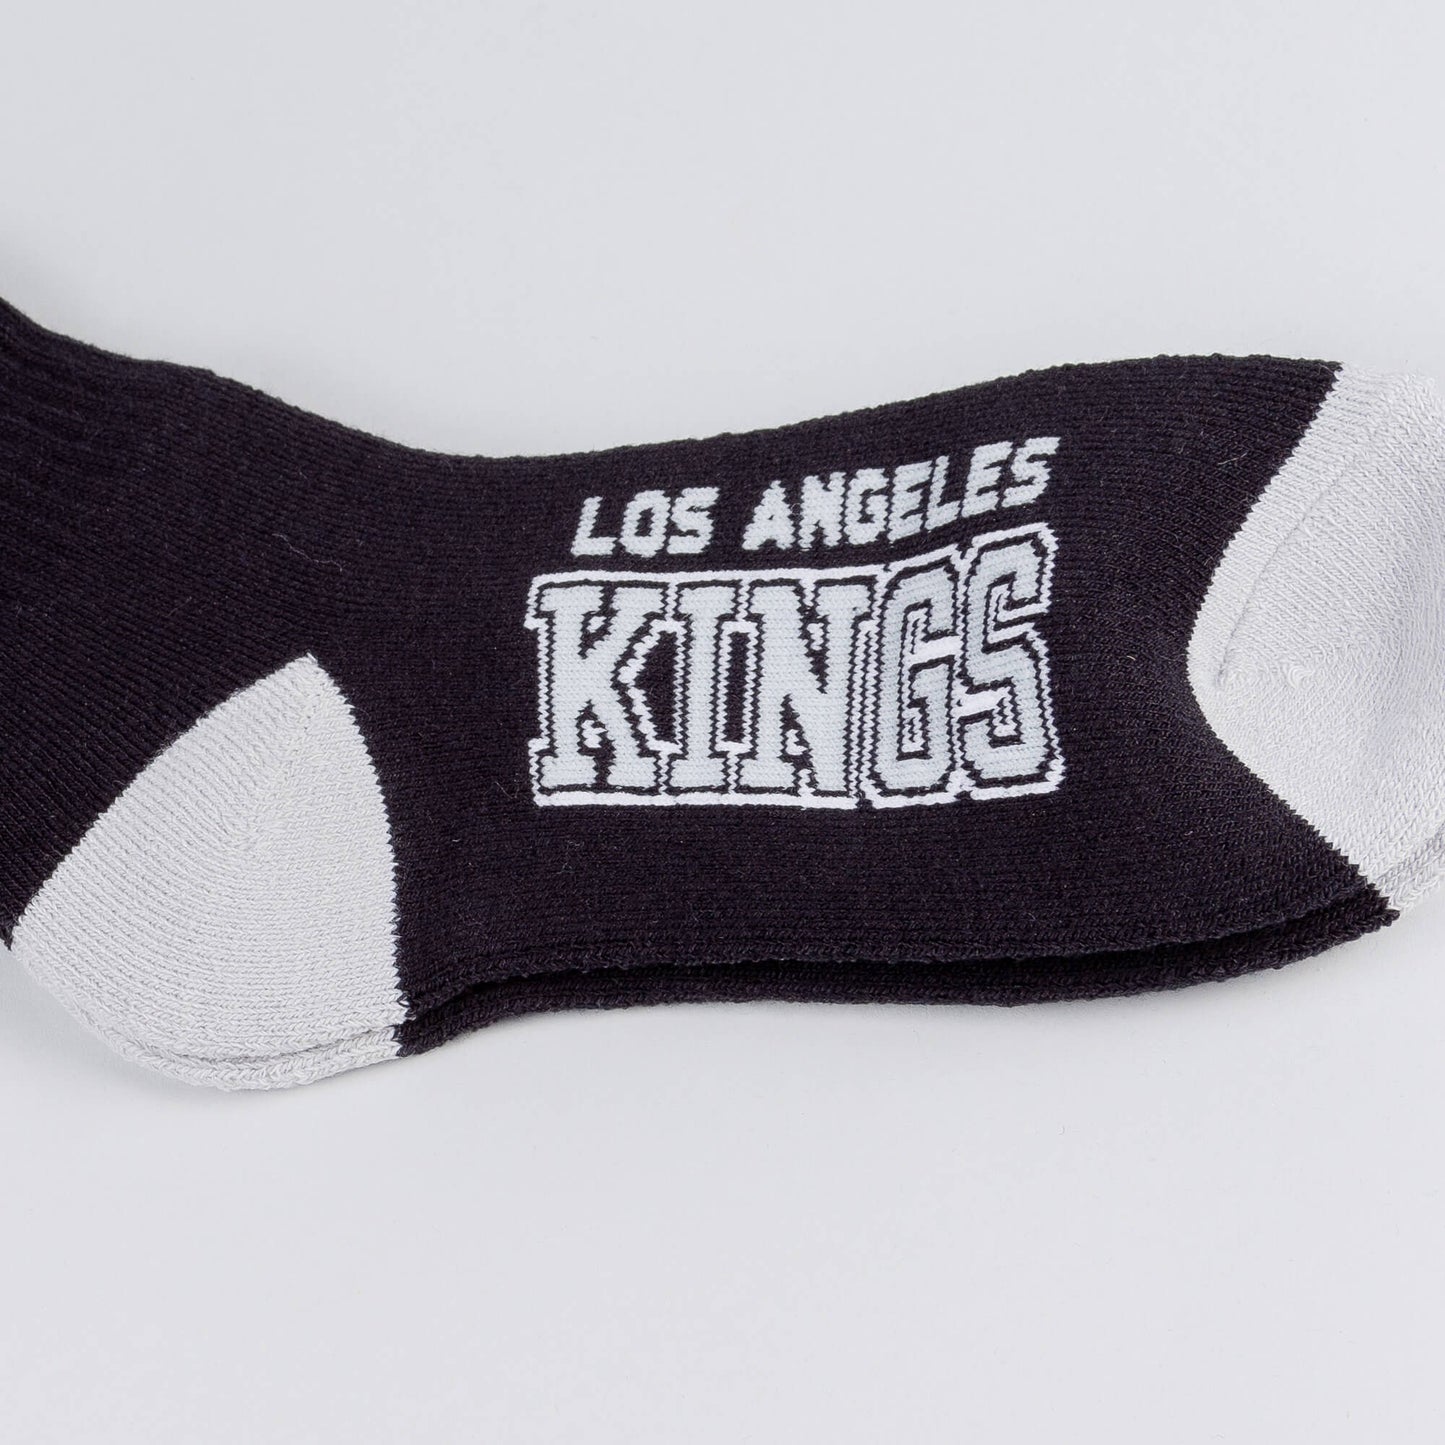 FBF Originals NHL 4 Stripes Crew Socks Los Angeles Kings